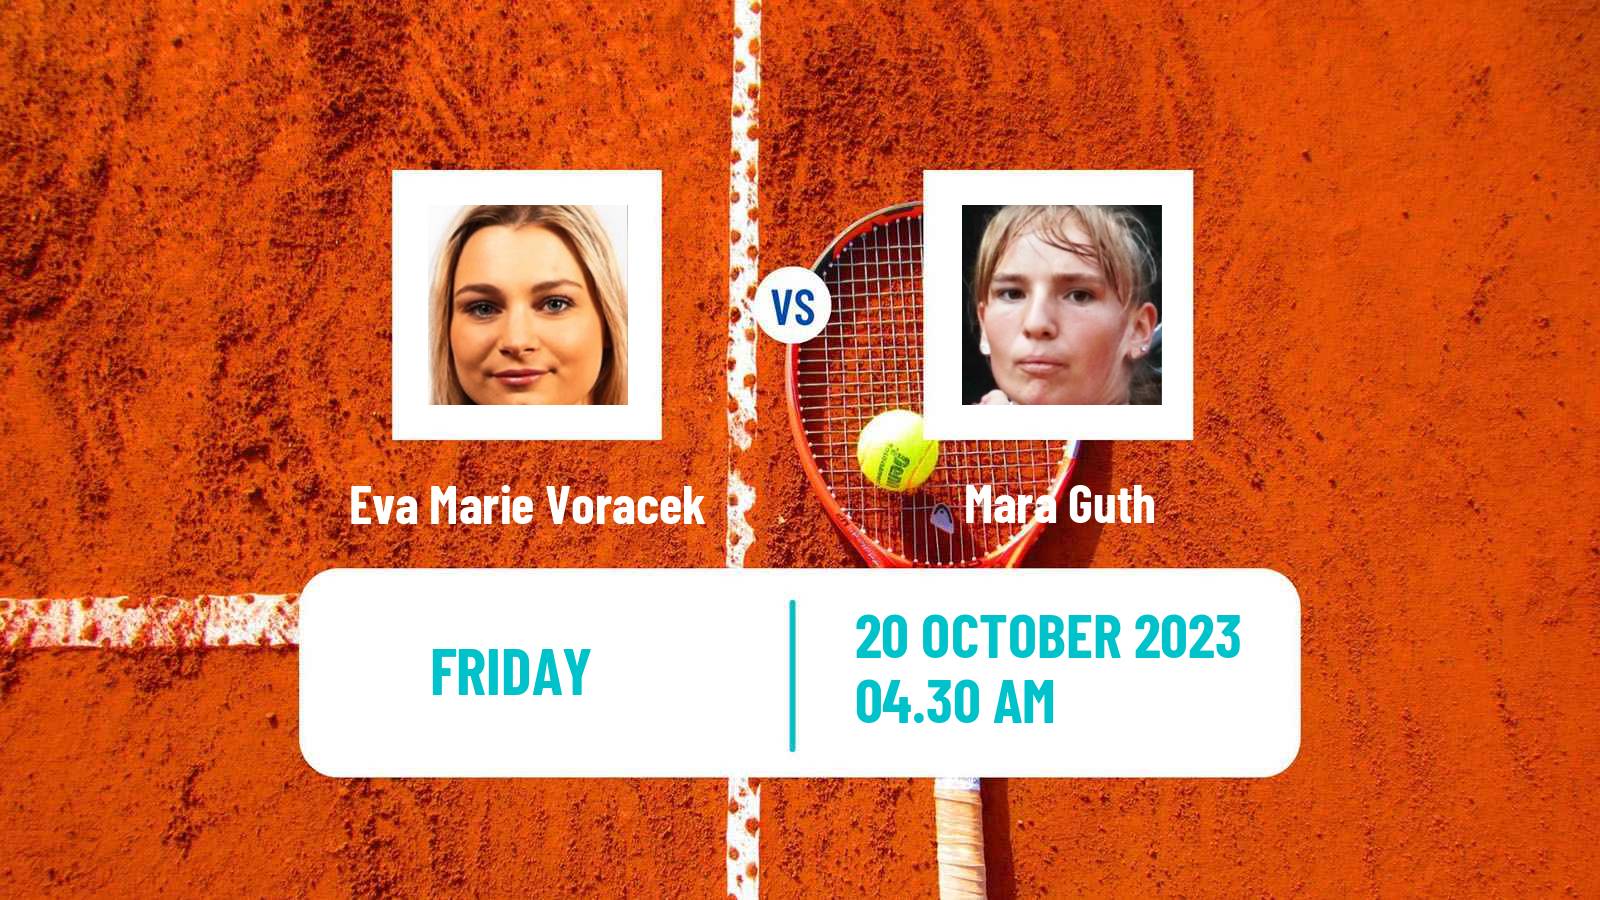 Tennis ITF W15 Heraklion 3 Women Eva Marie Voracek - Mara Guth